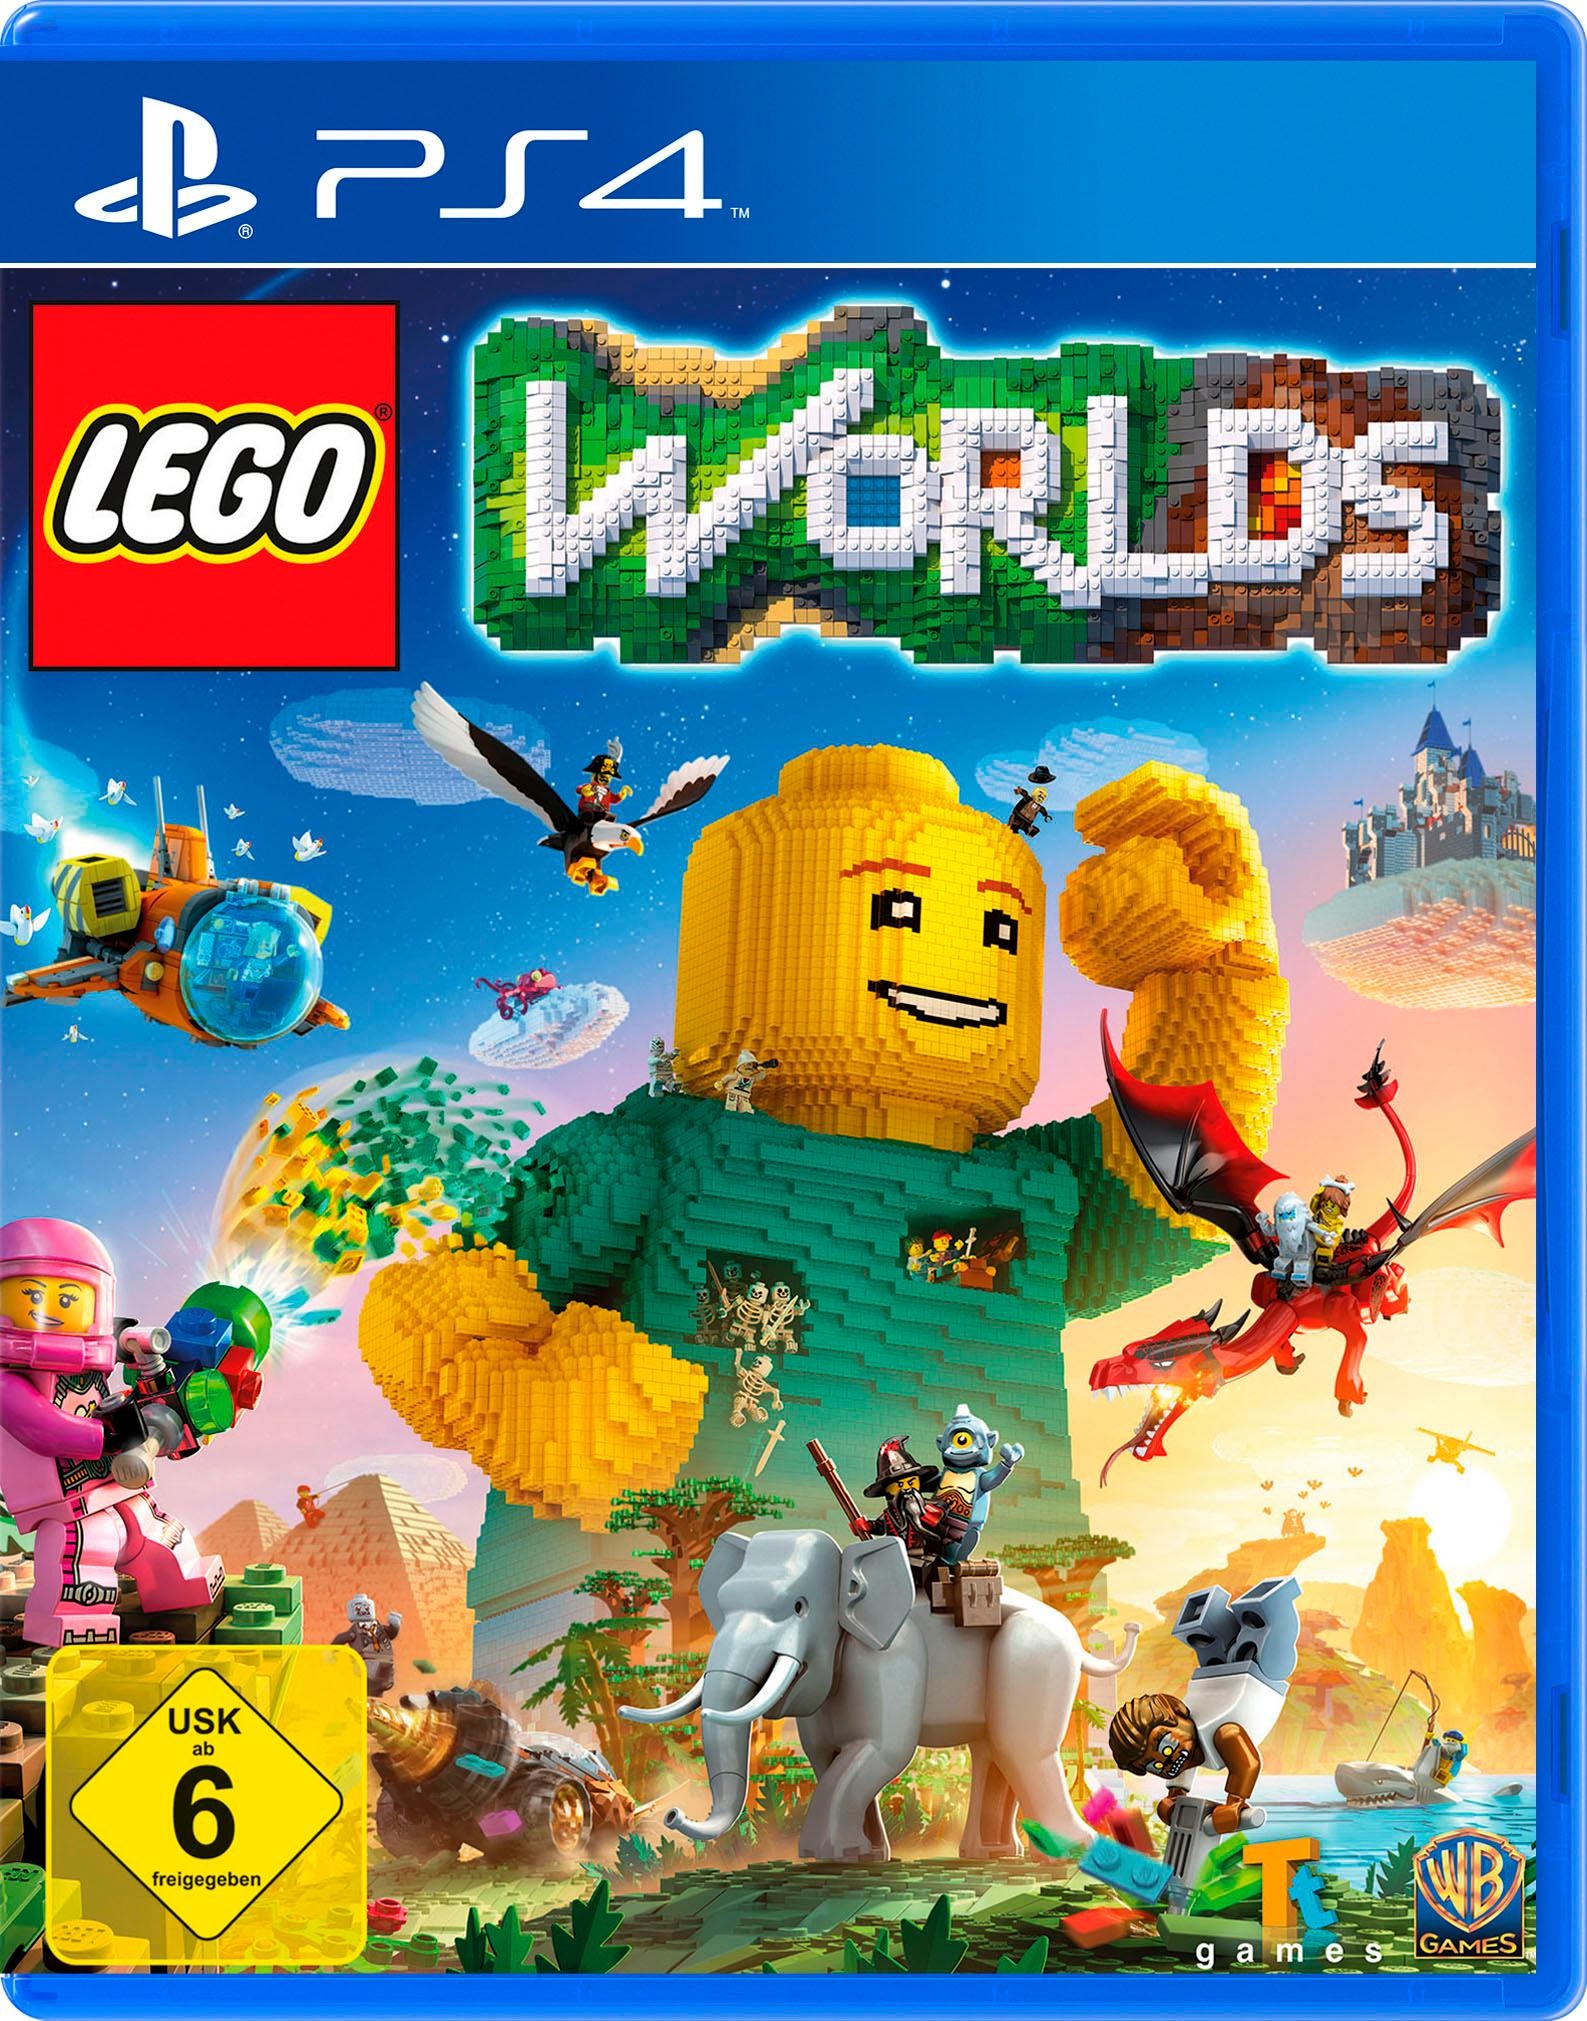 Warner Games Spielesoftware »Lego Worlds«, PlayStation 4, Software Pyramide